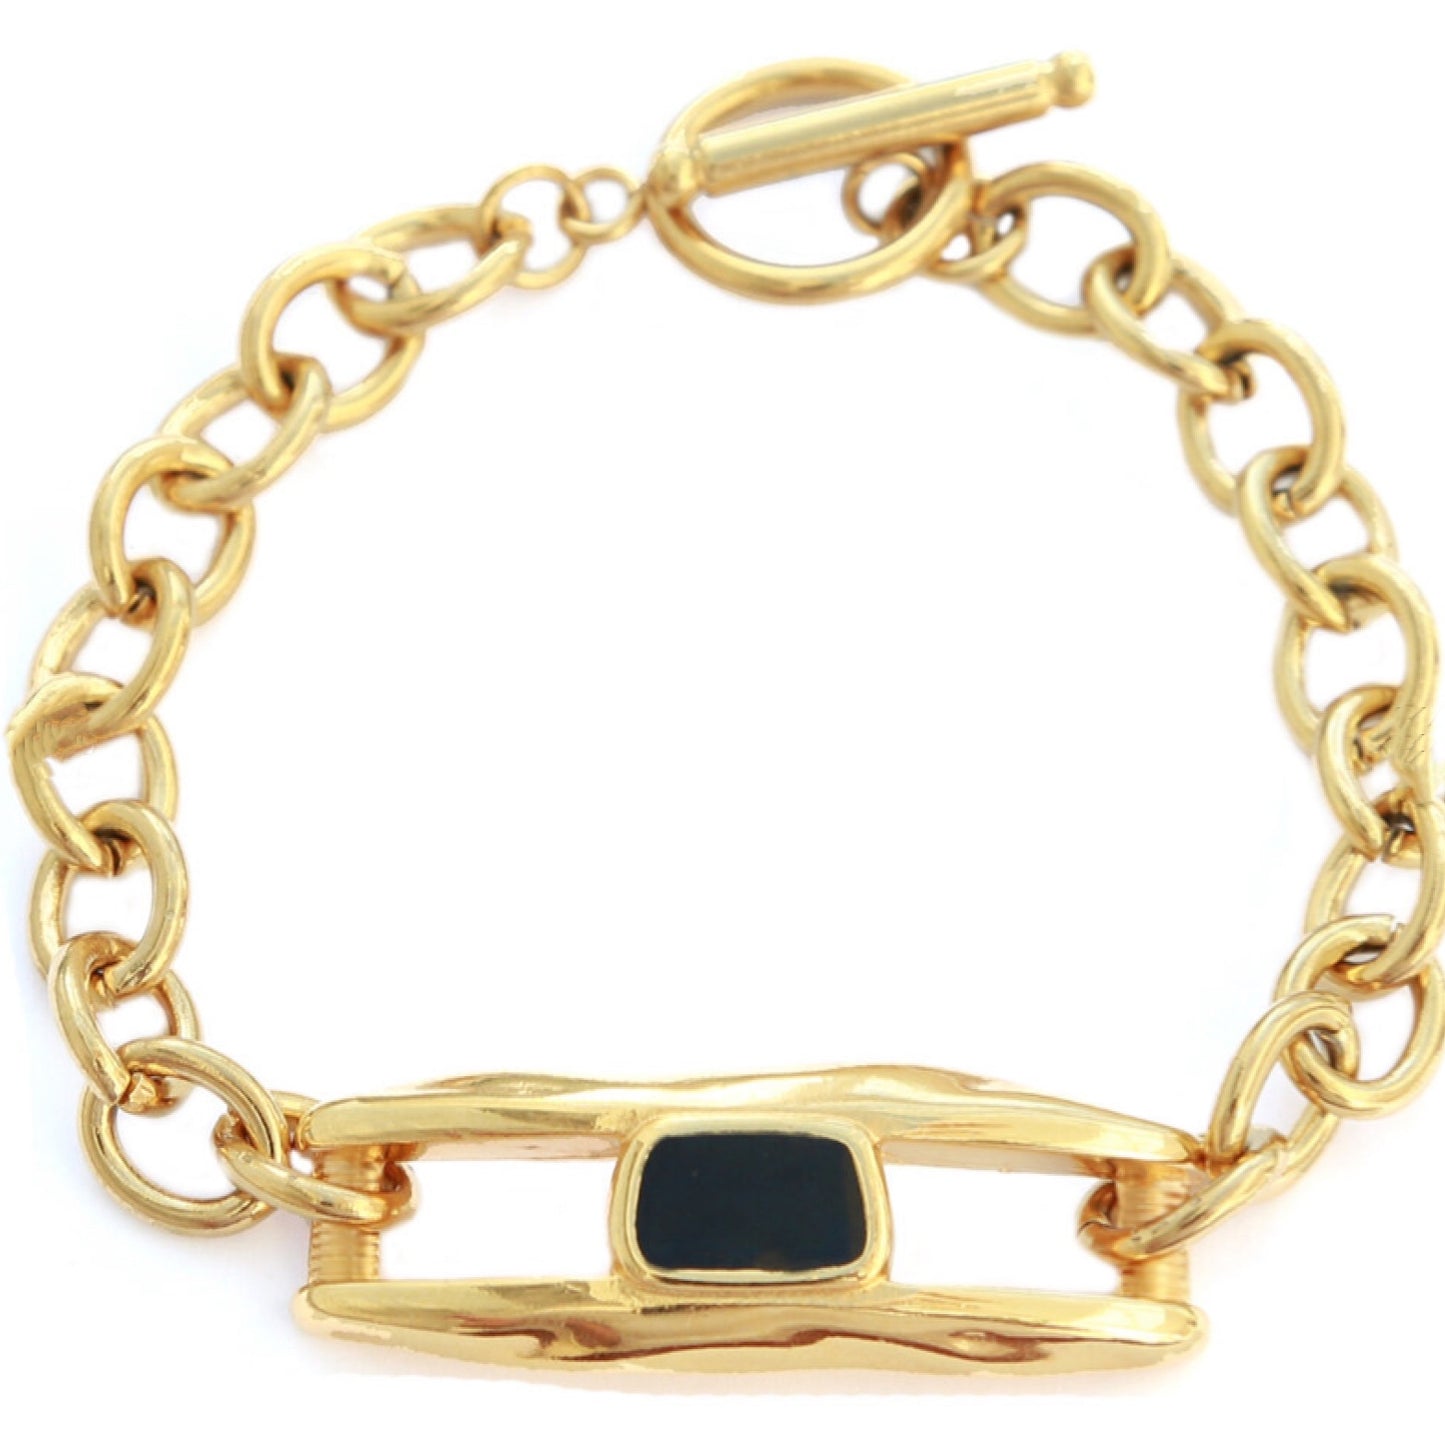 Gold Bracelet Chain Style